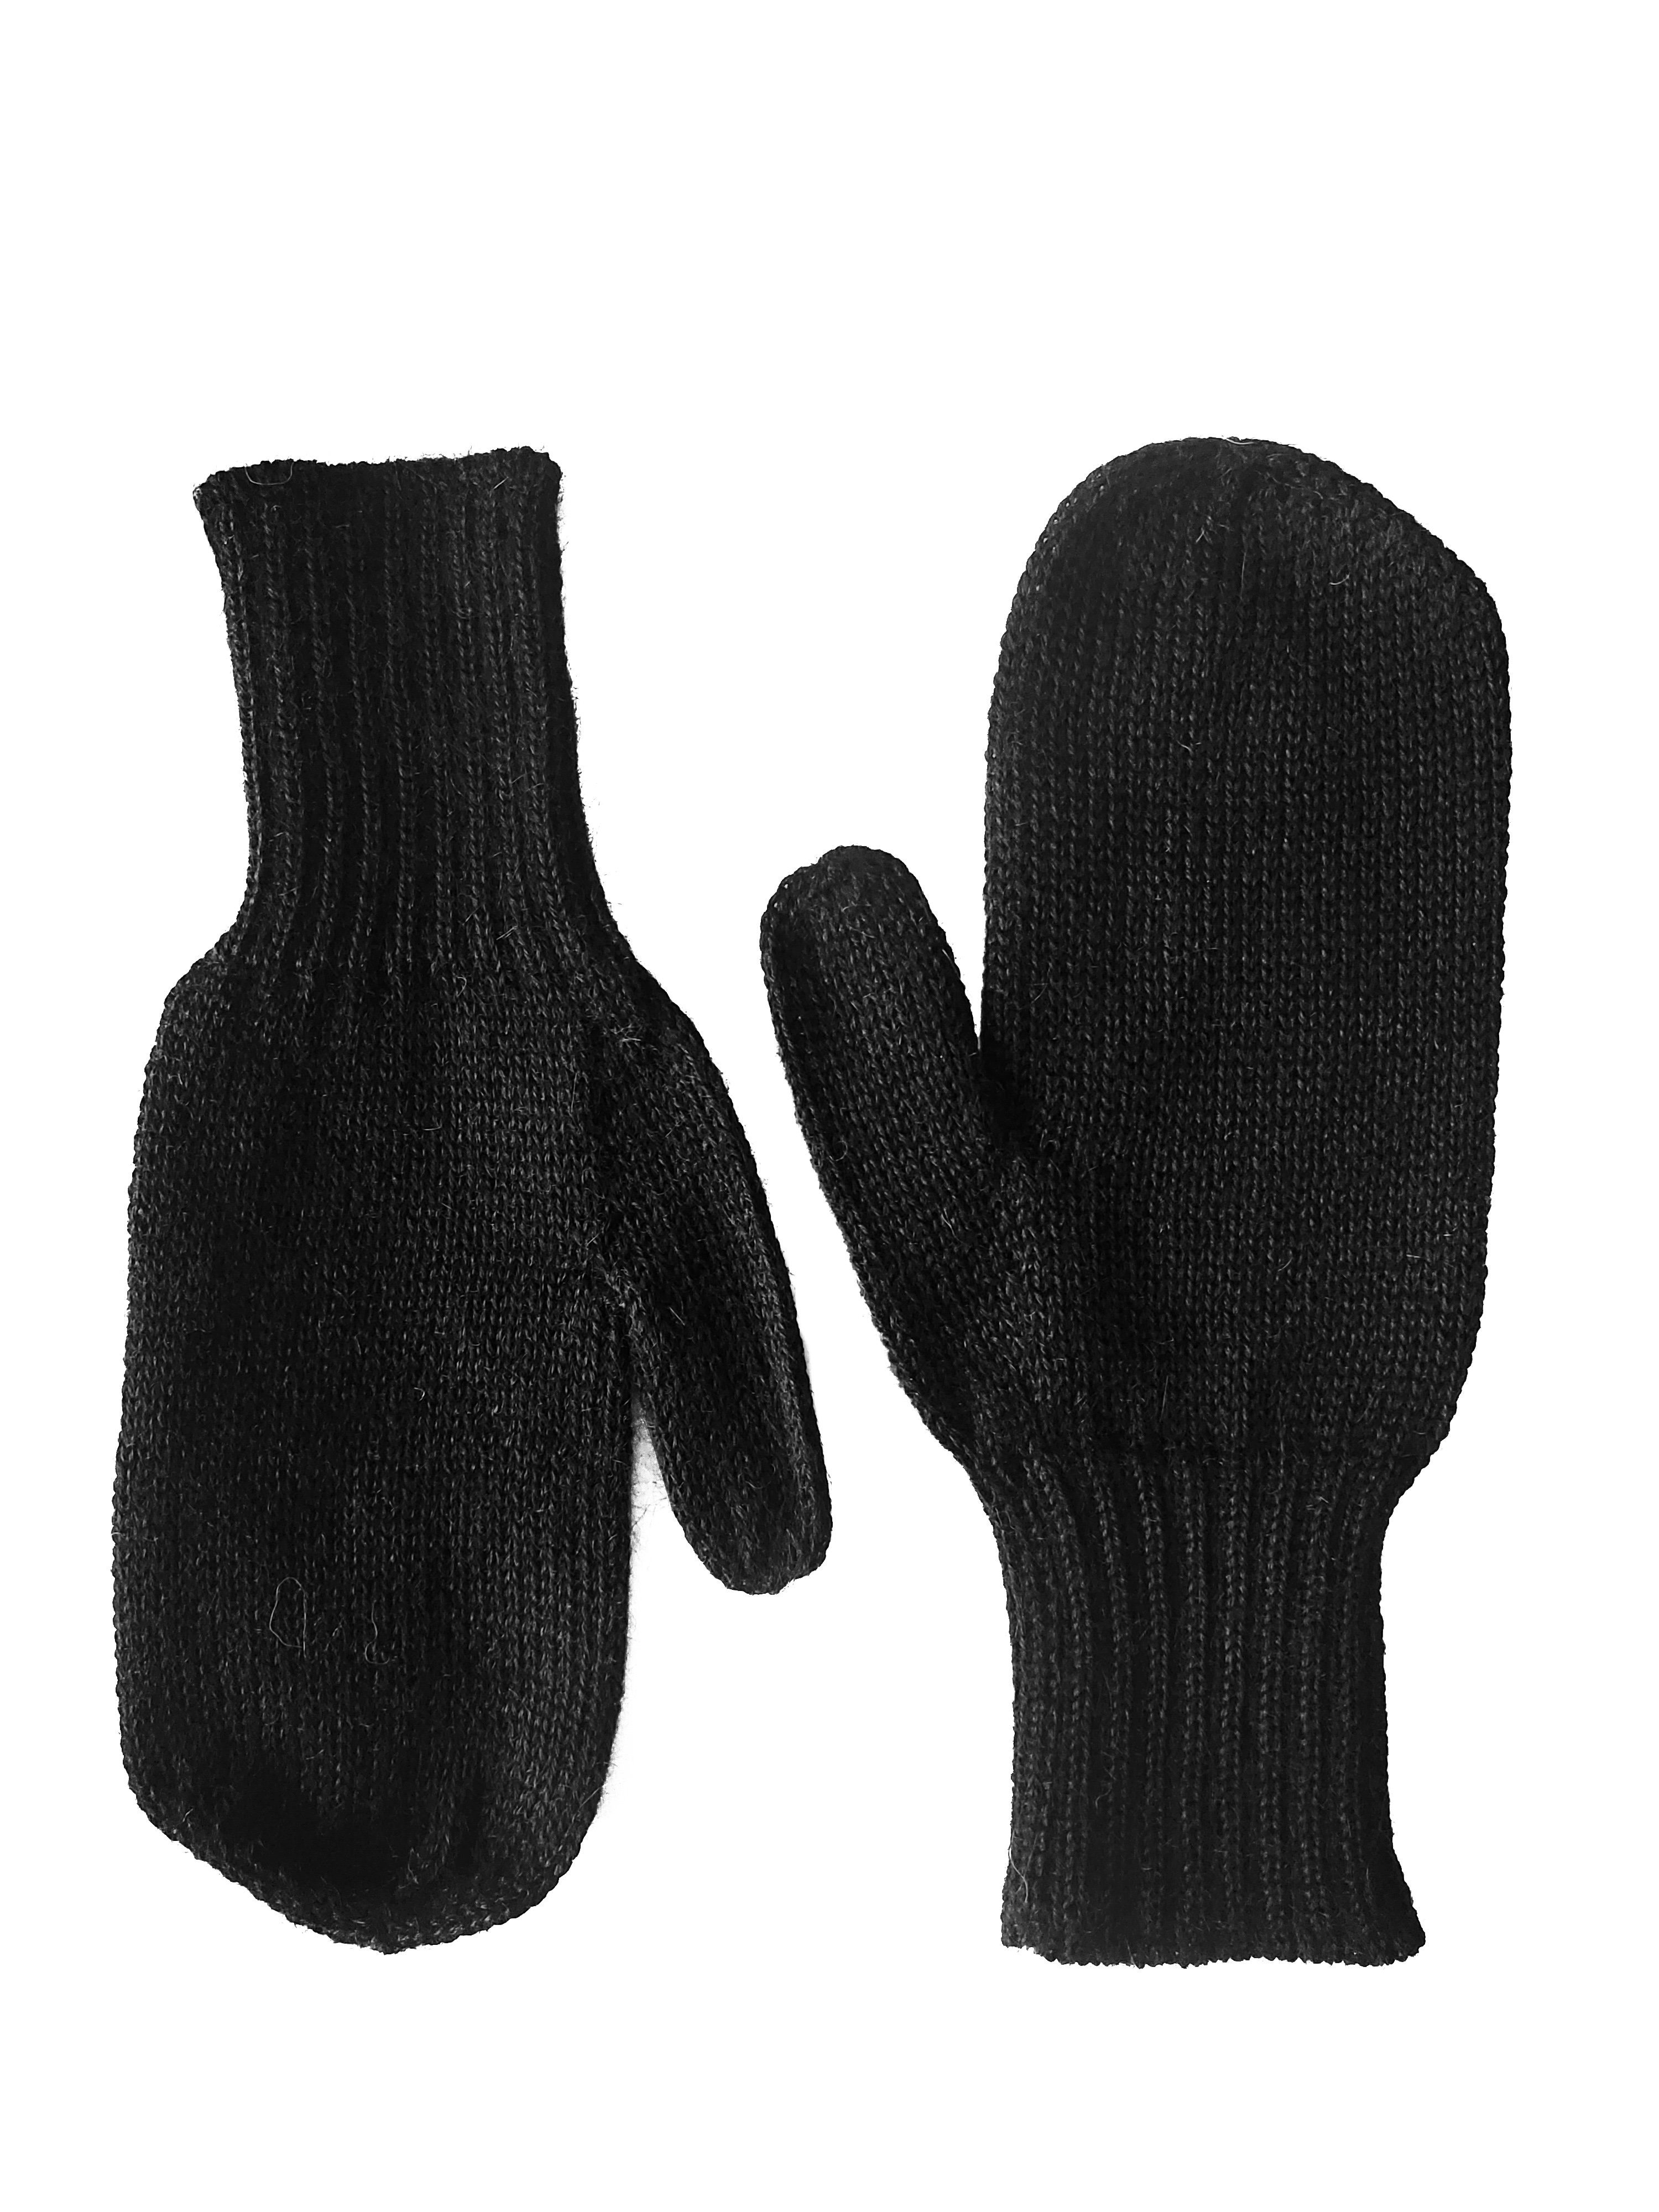 Fäustlinge Handschuhe Alpakawolle Posh 100% Damen aus Herren Alpaka Gear schwarz Pugnoguanti